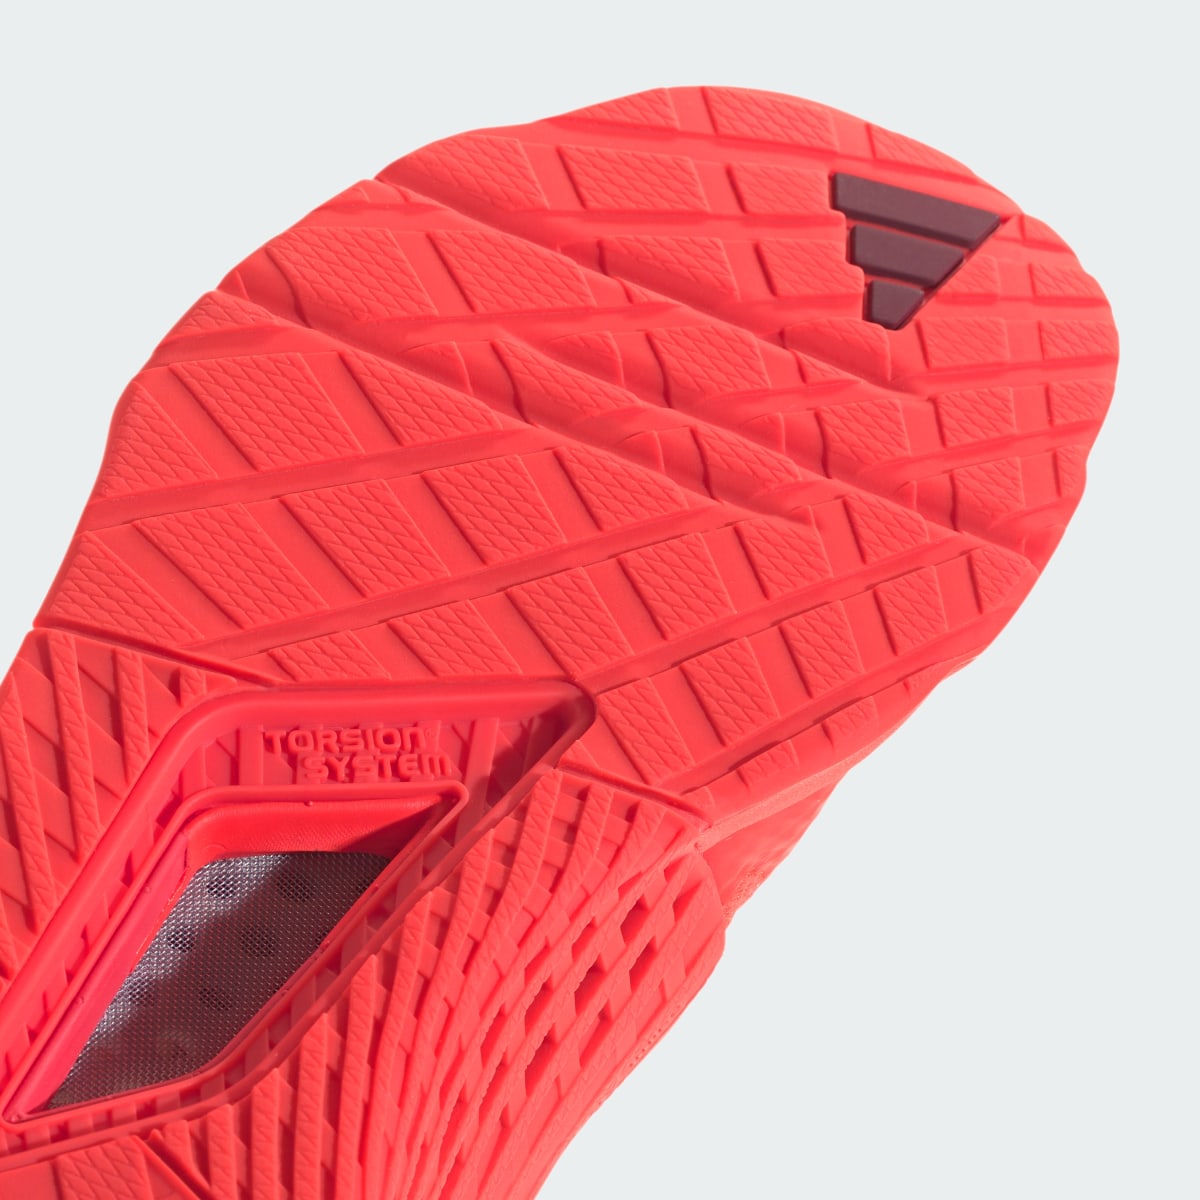 Adidas Scarpe Dropset 2. 4